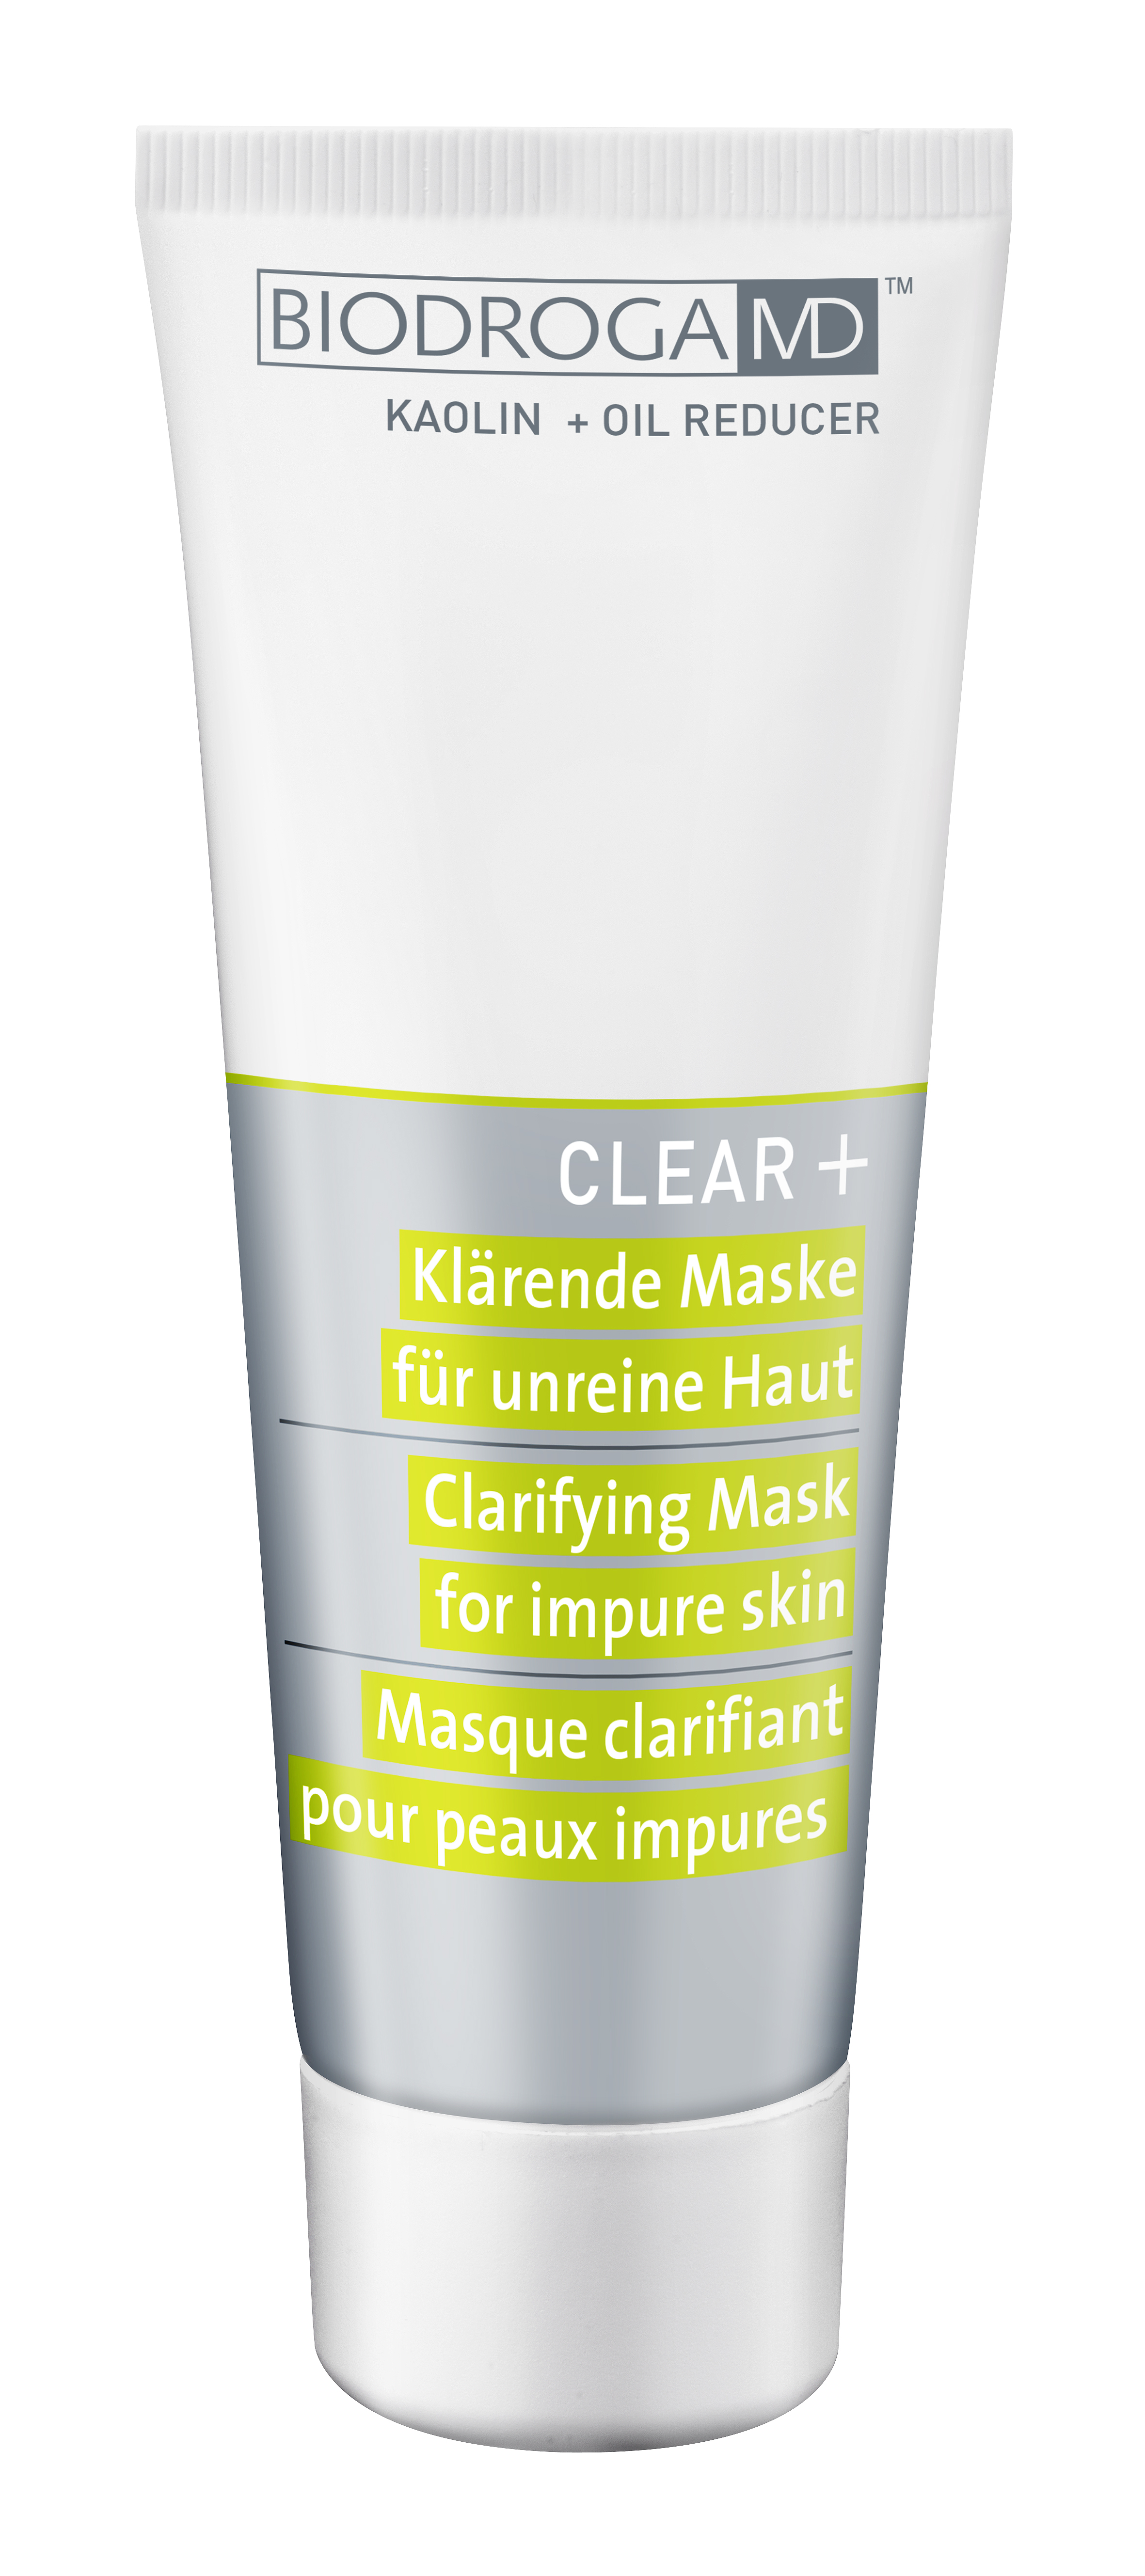 Biodroga MD Clear+ Clarifying Mask For Impure Skin 75ml